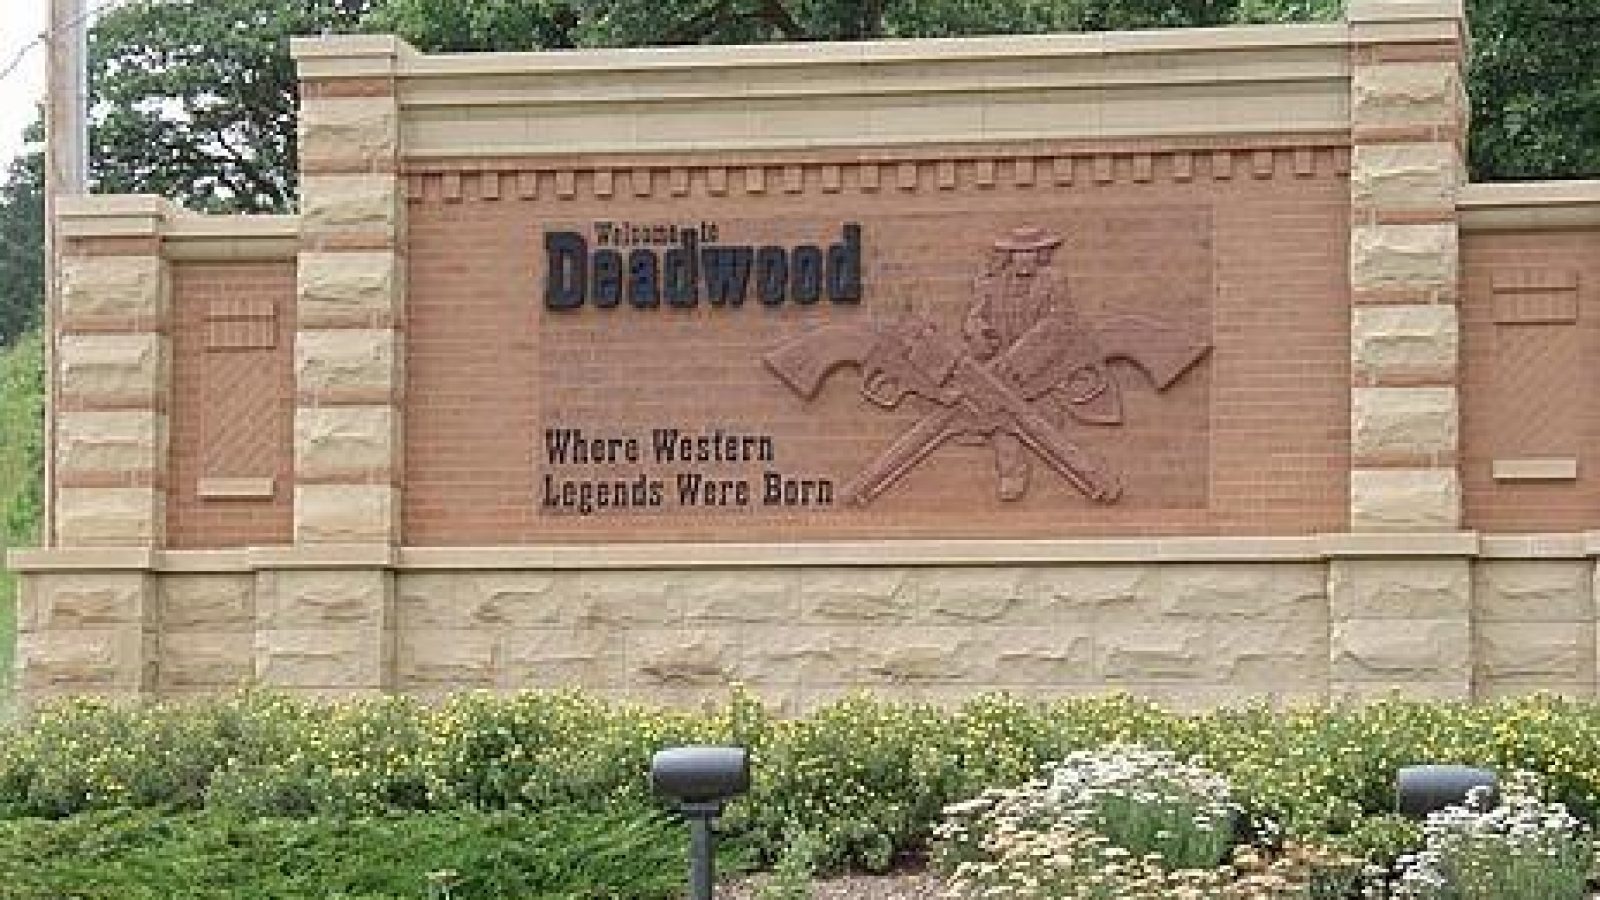 Deadwood-Sign_1125-1